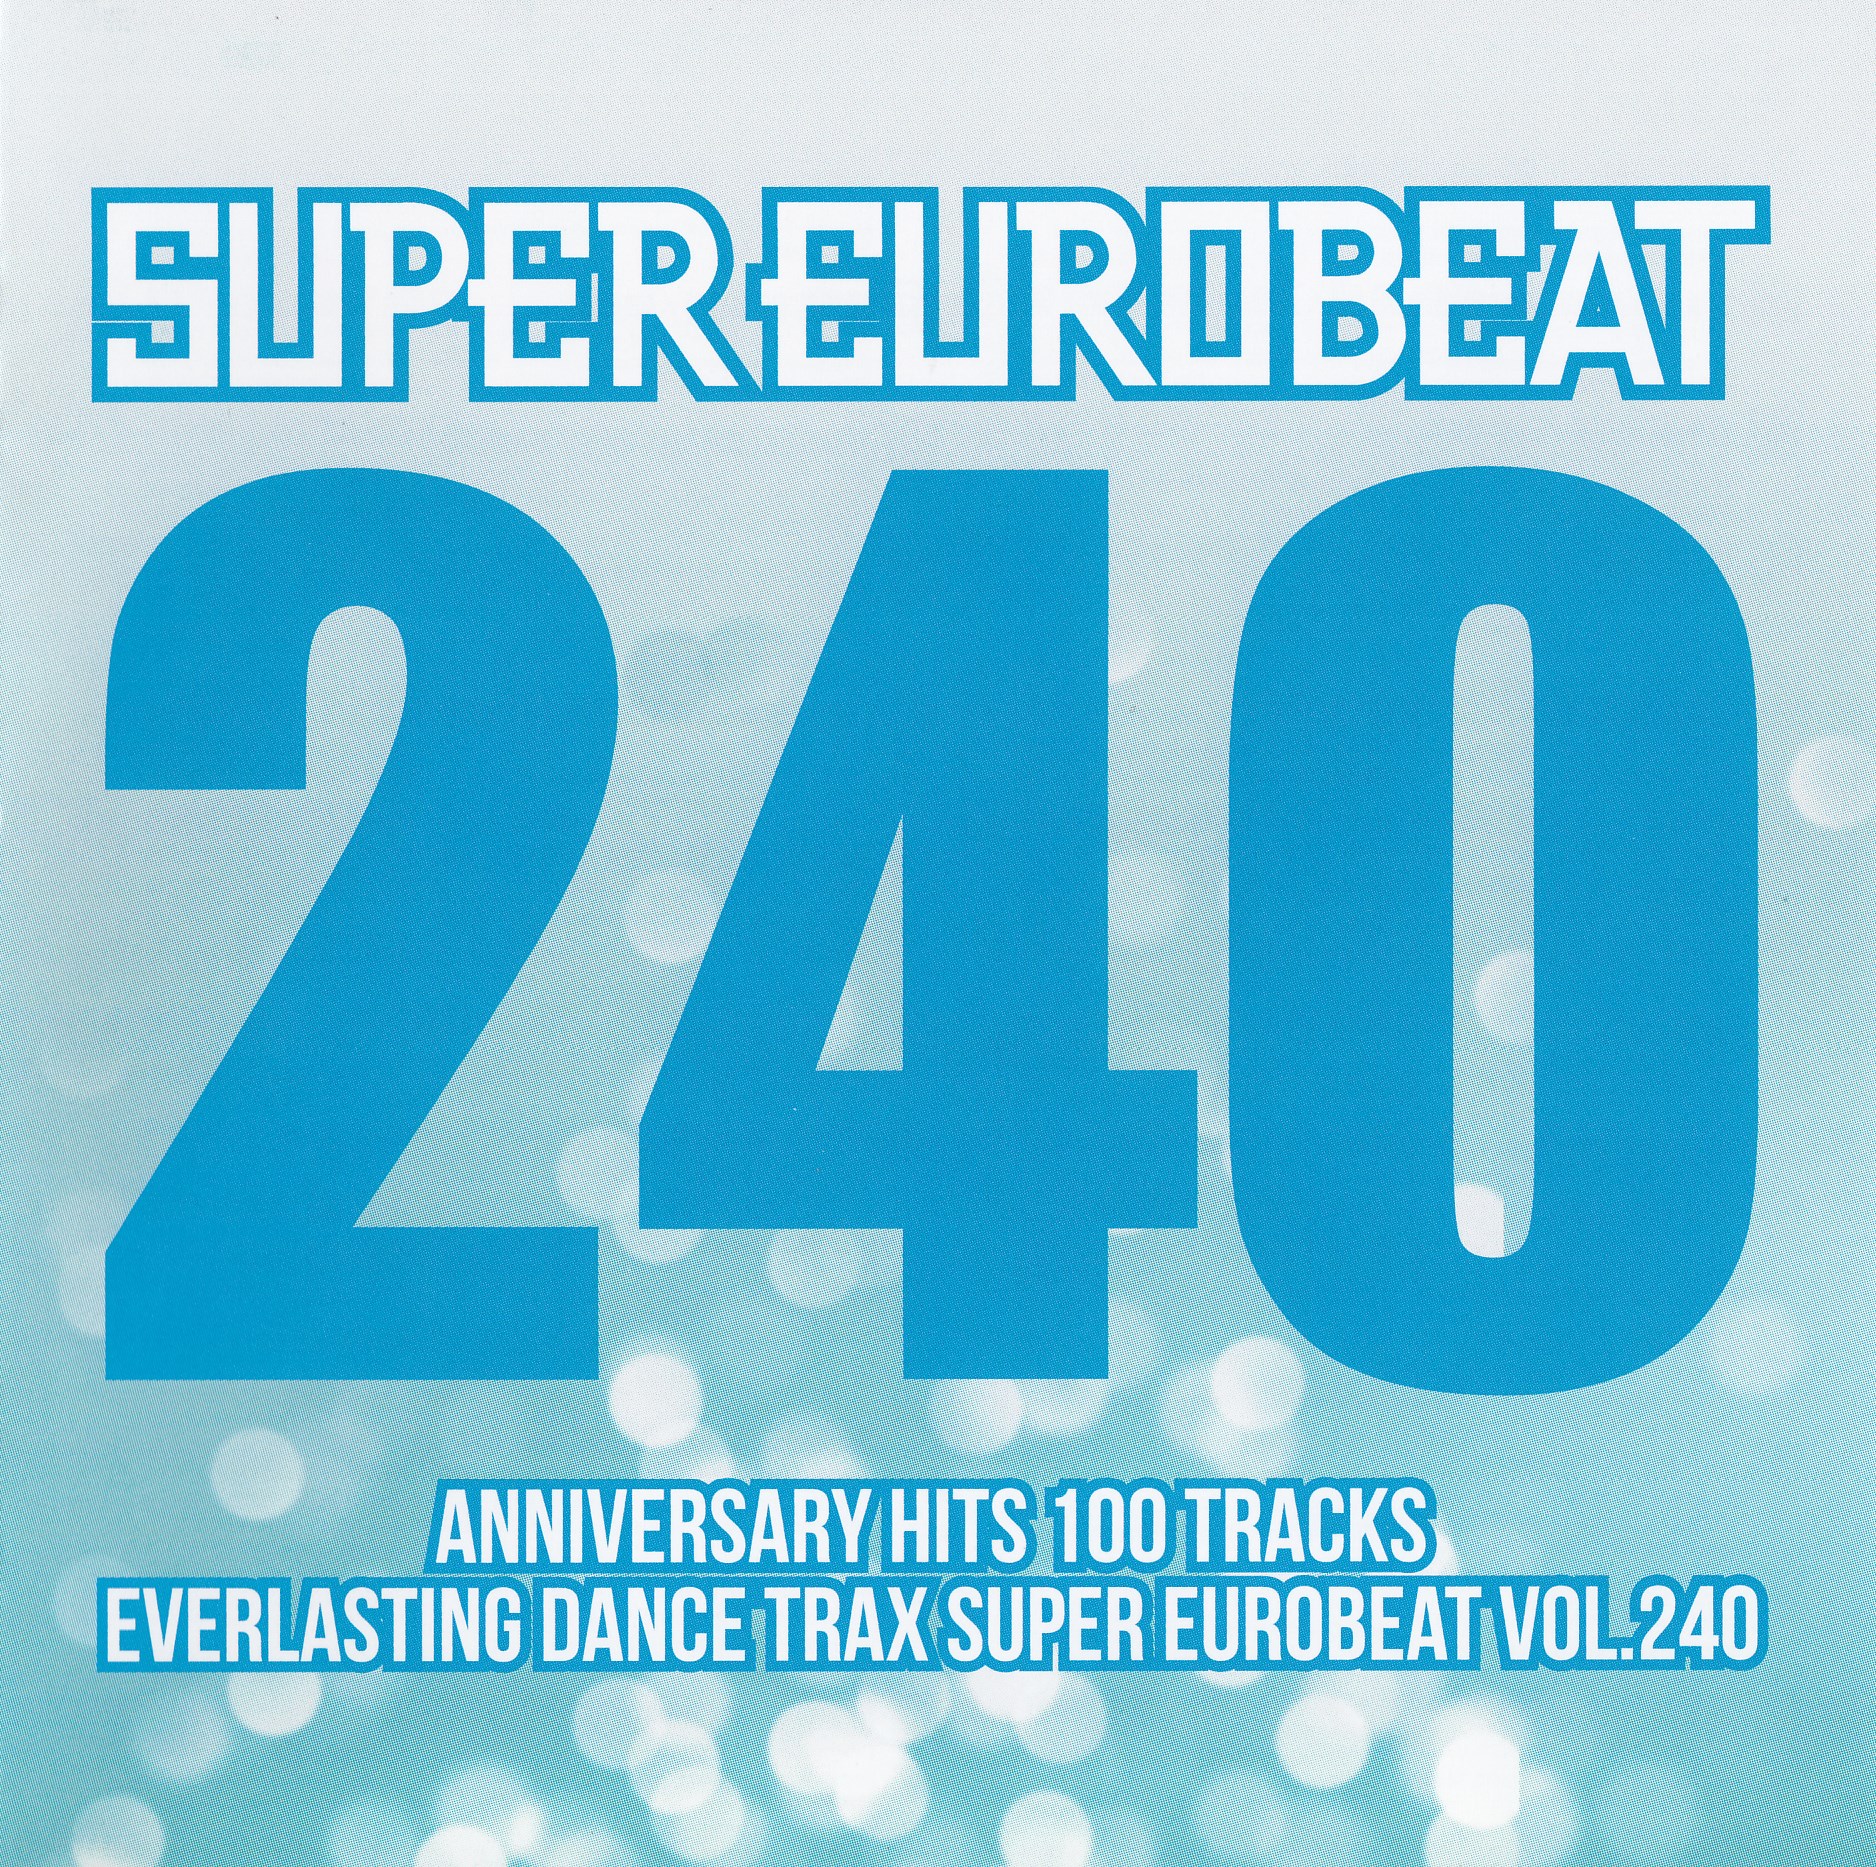 Super Eurobeat Vol. 240 | Eurobeat Wiki | Fandom